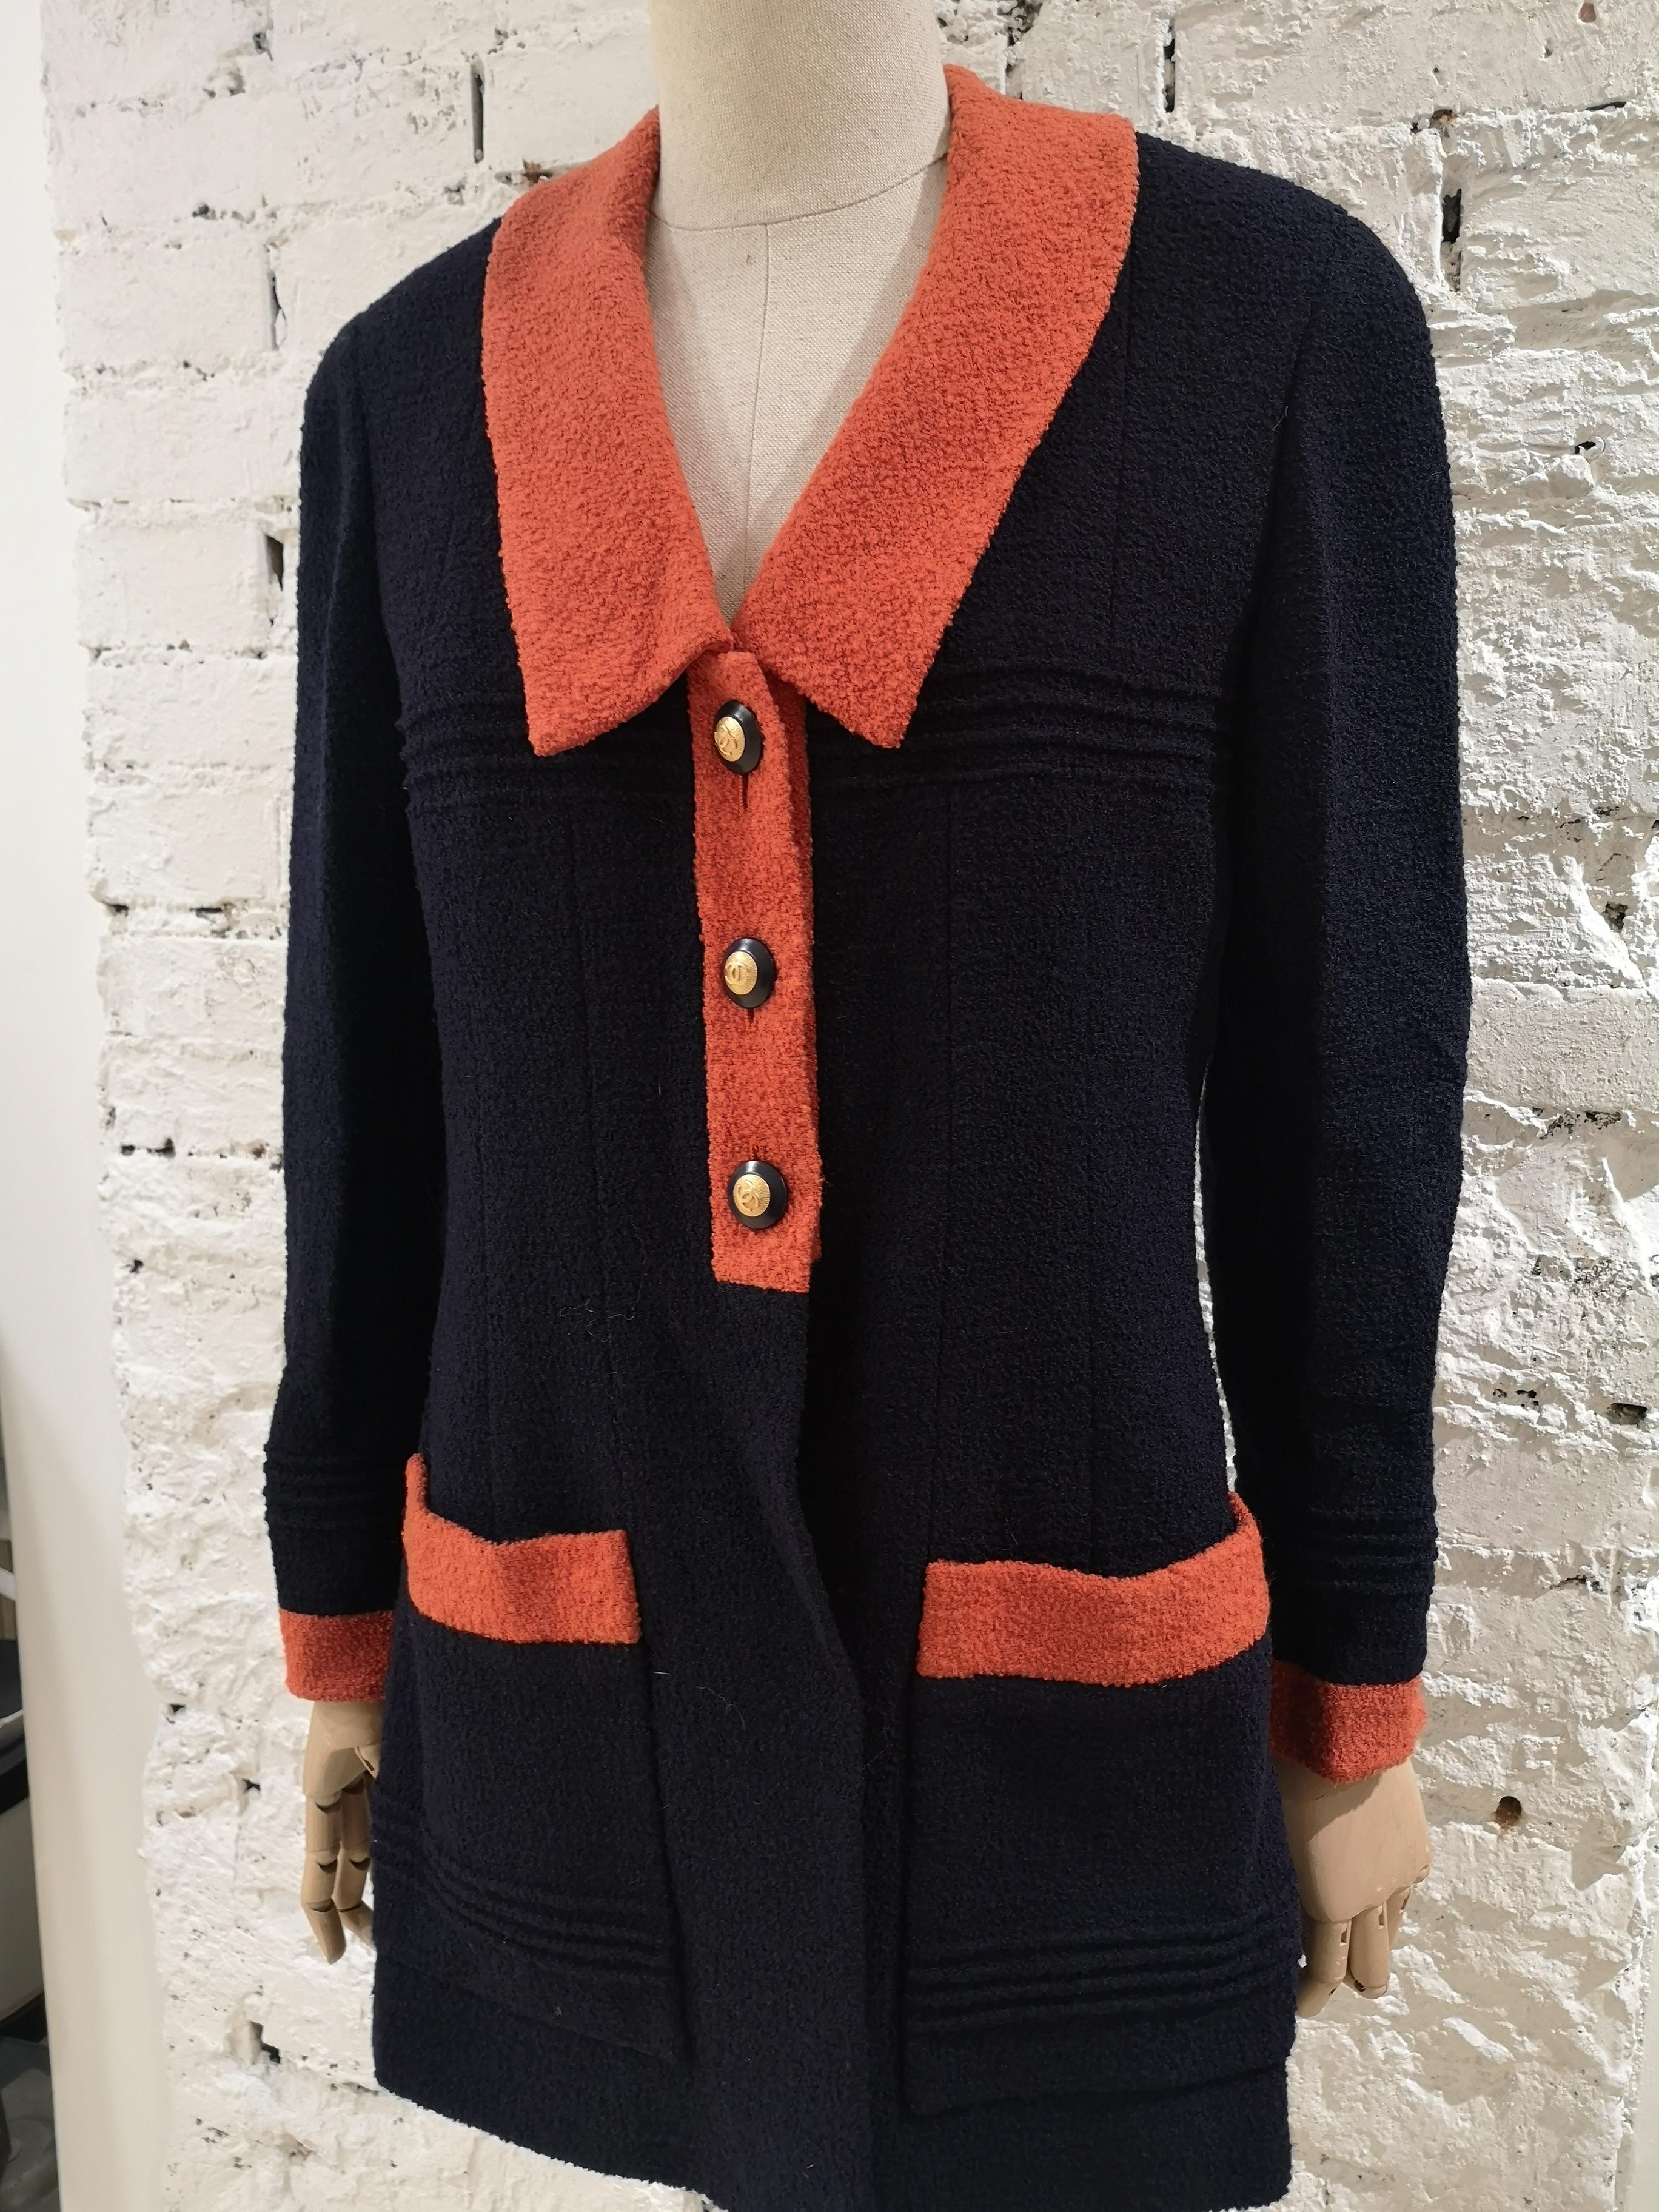 Chanel blue orange wool blazer / jacket
Chanel blue and orange blazer totally made in France in size 38
lining silk
total lenght 77 cm 
shoulder to hem 58 cm